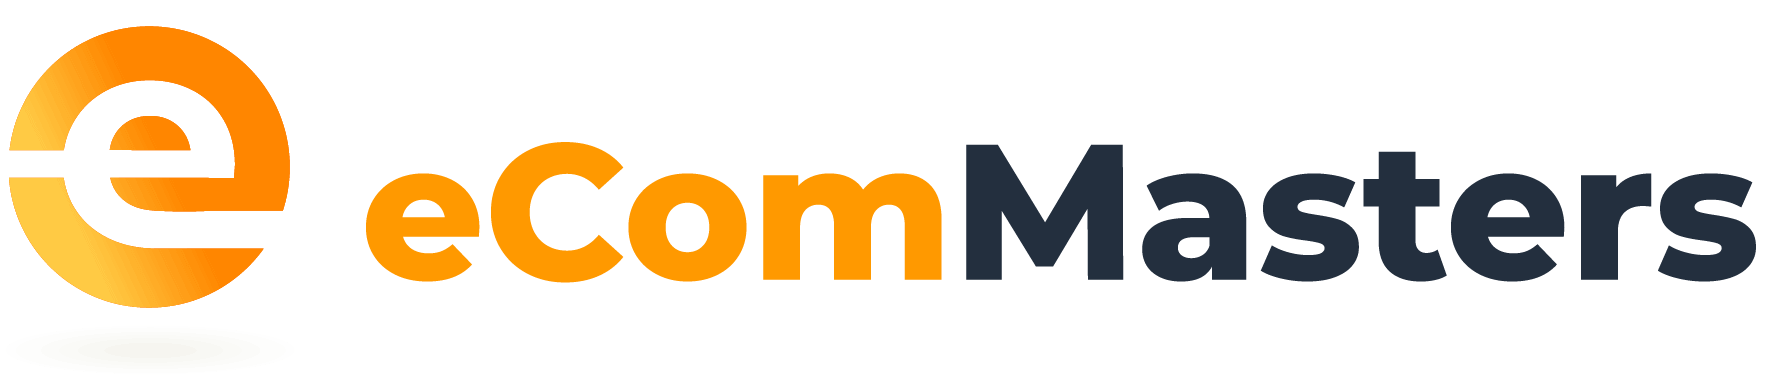 eComMasters Logo 05 1